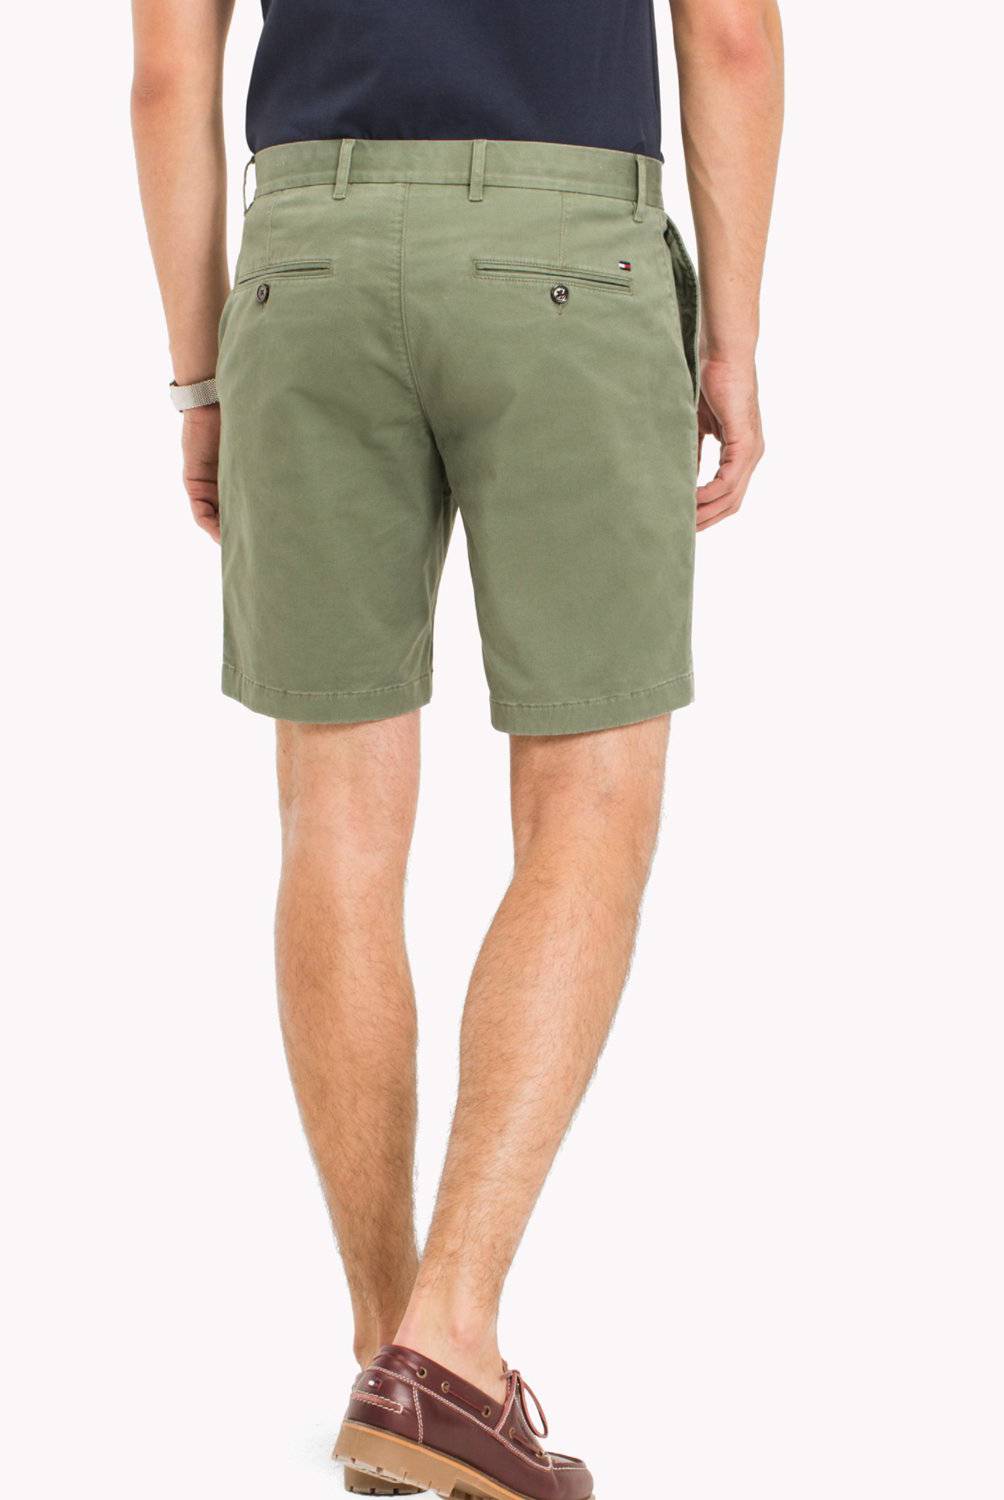 TOMMY HILFIGER - Shorts con Microestampado